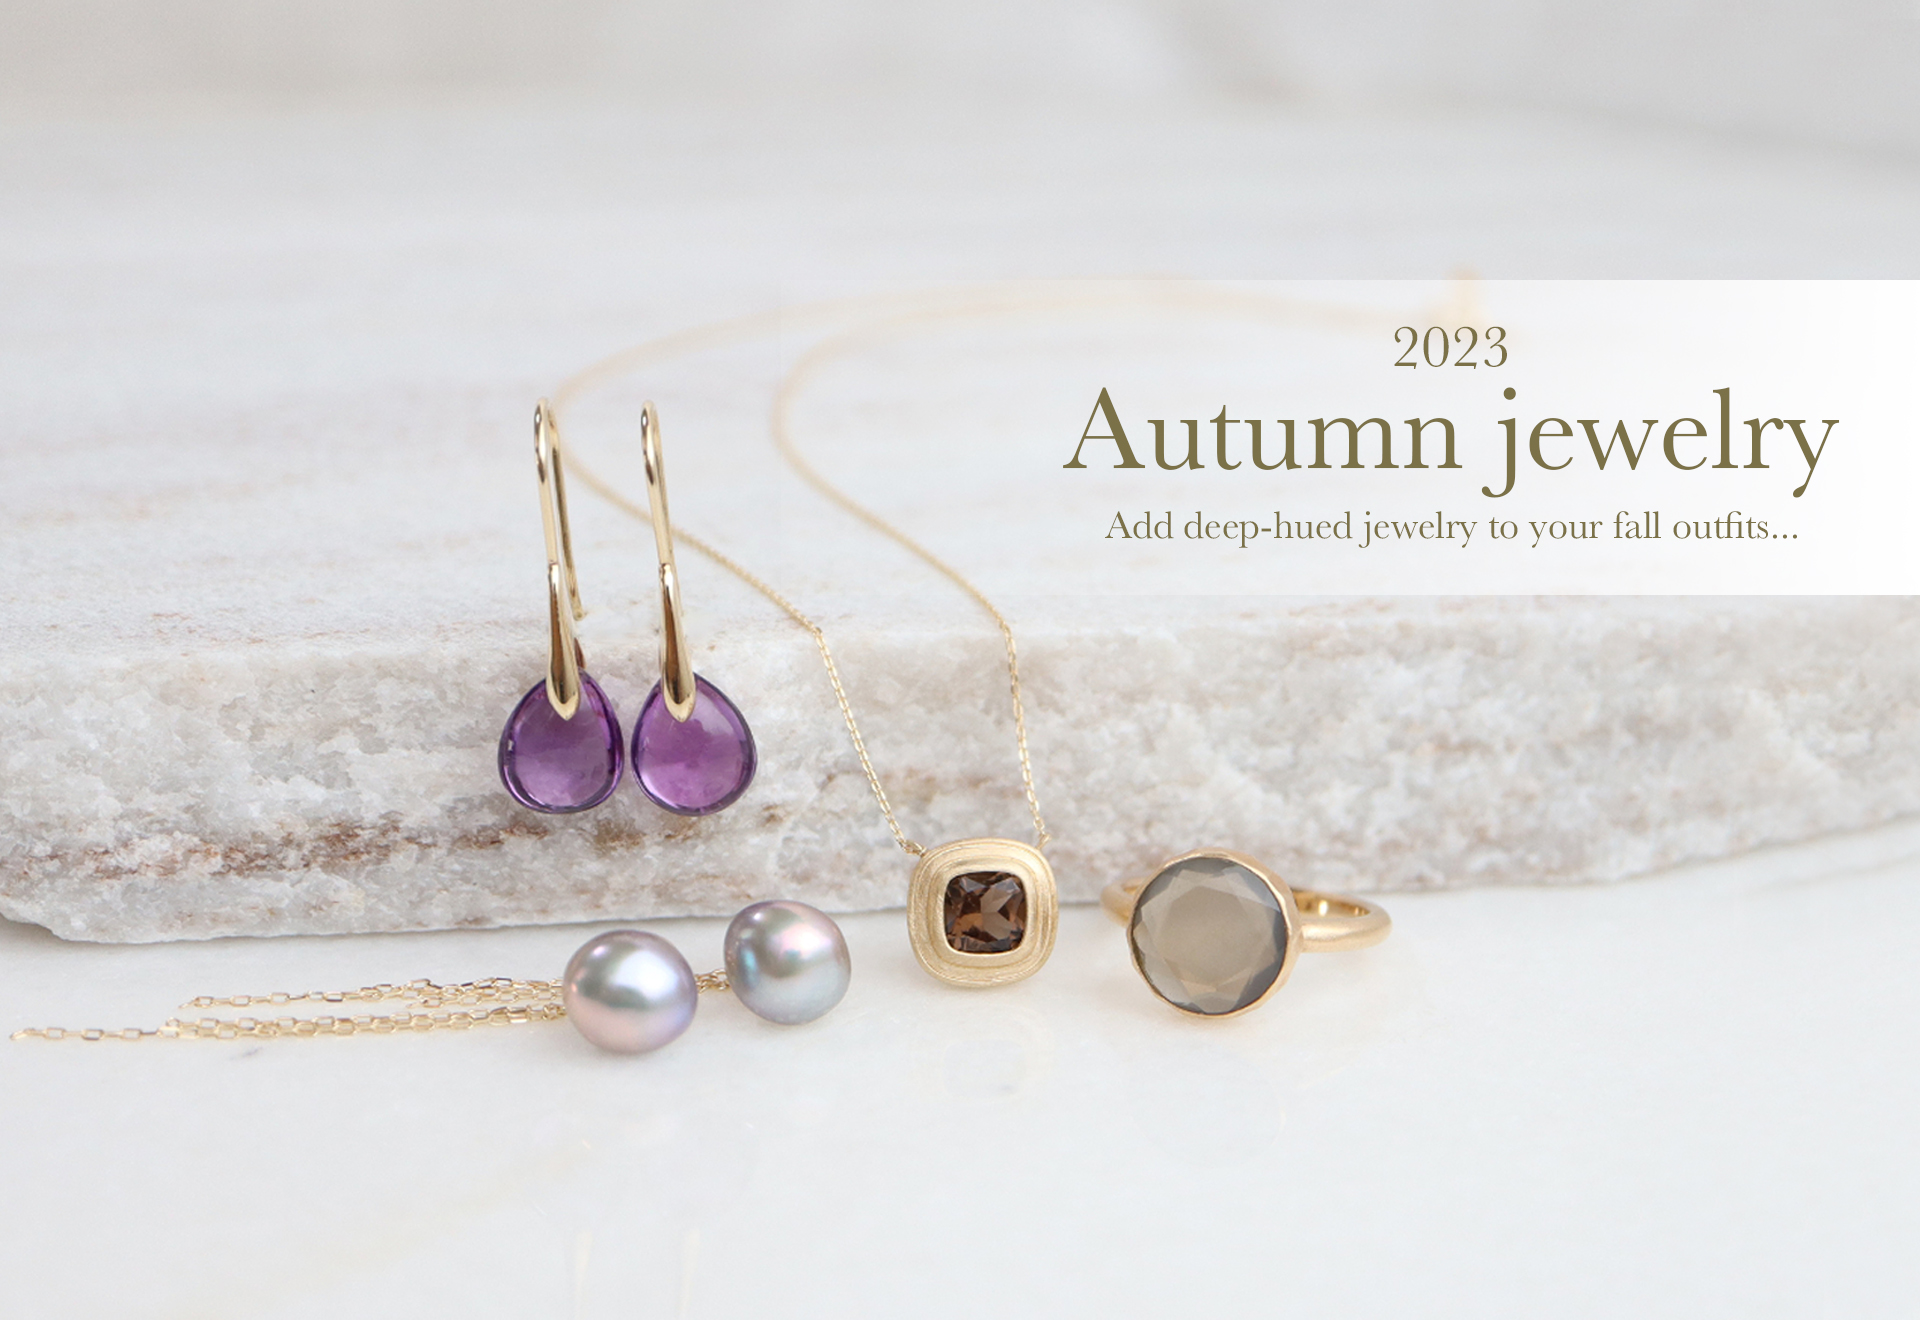 Autumn jewelry